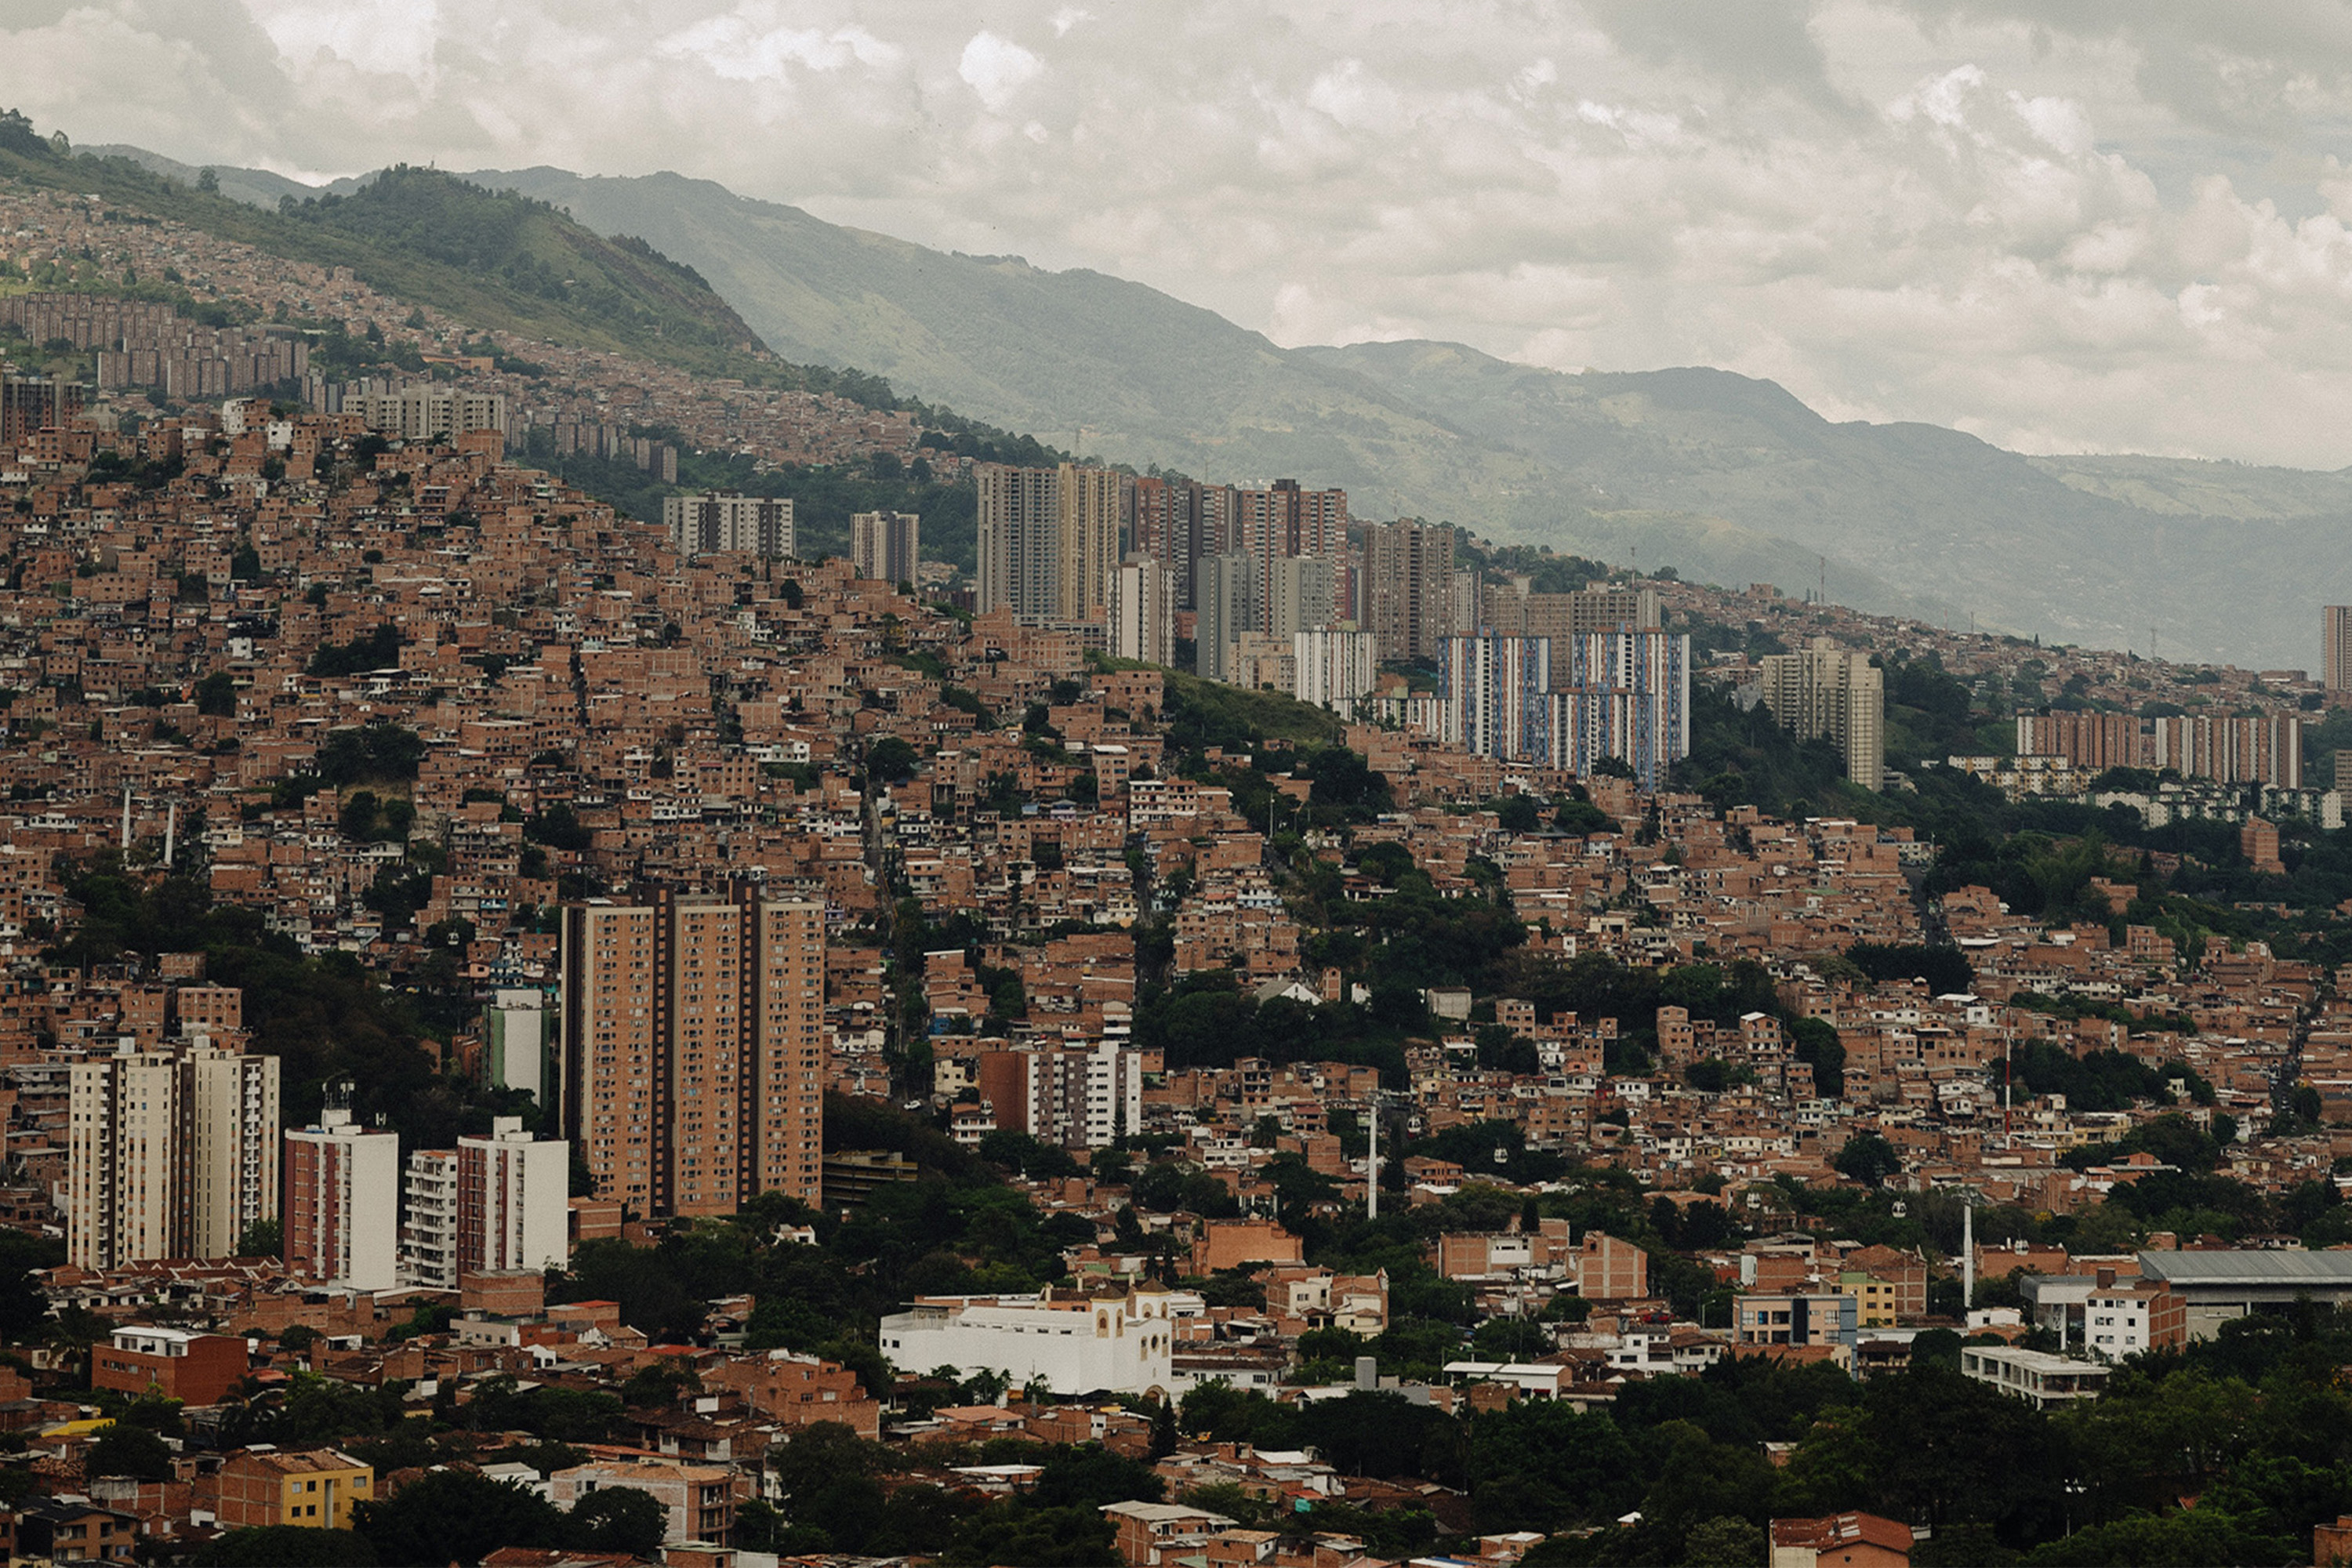 Skyline of Medellín